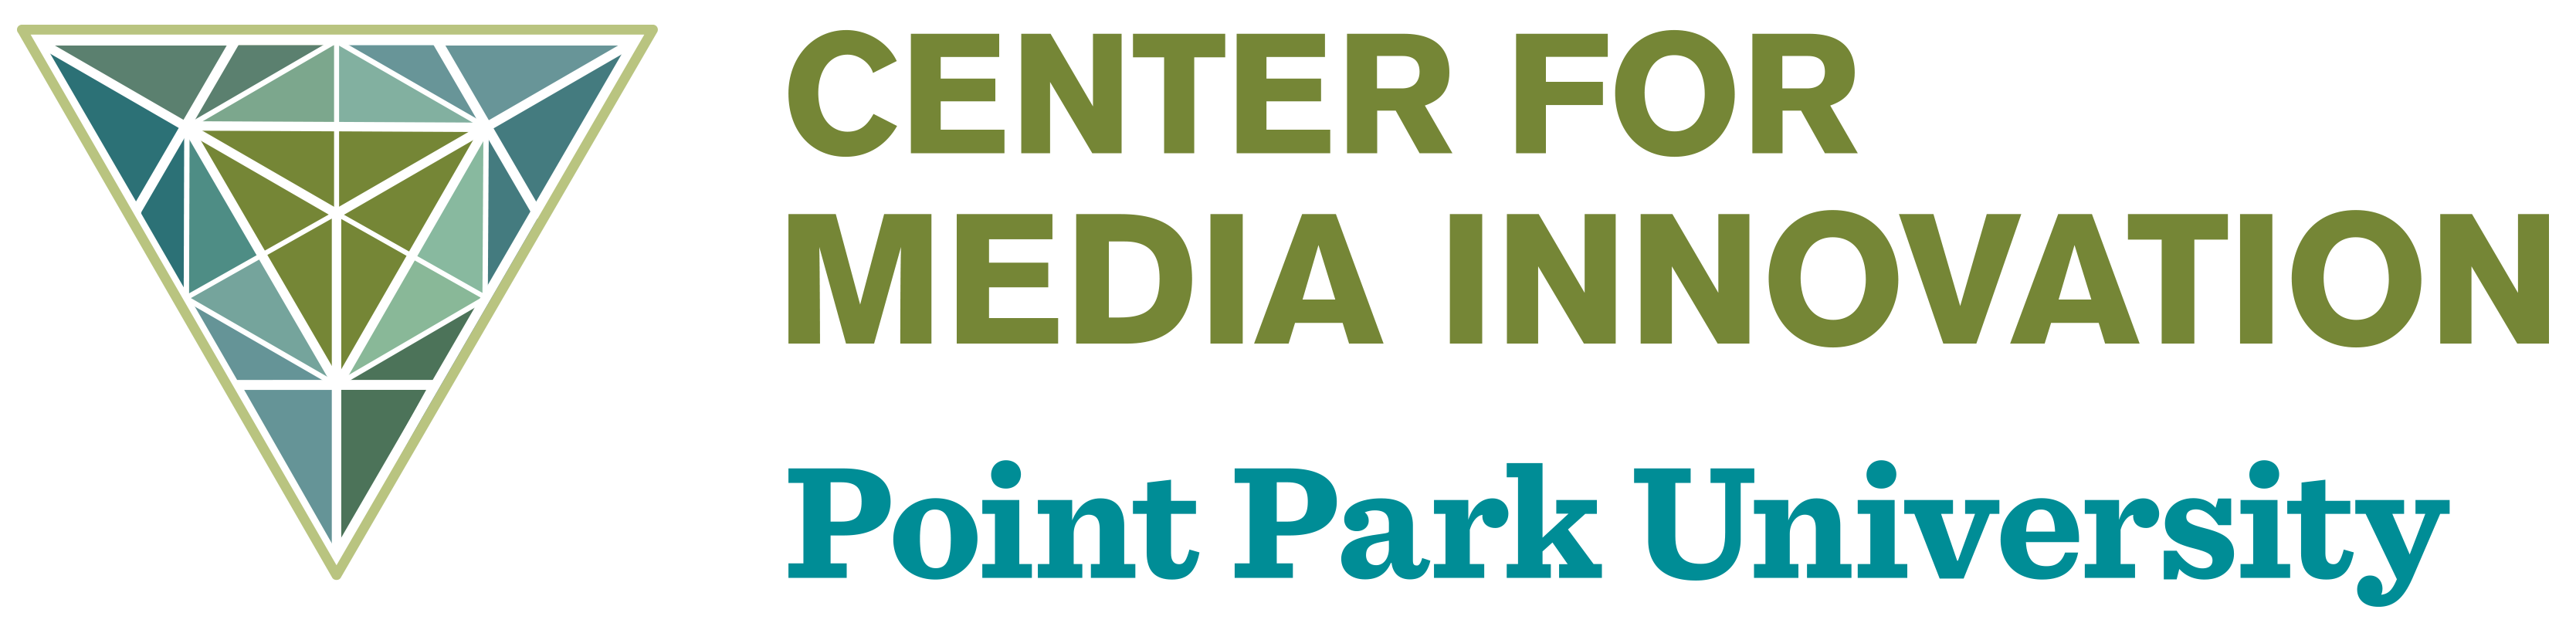 Center for Media Innovation logo; links to CMI website